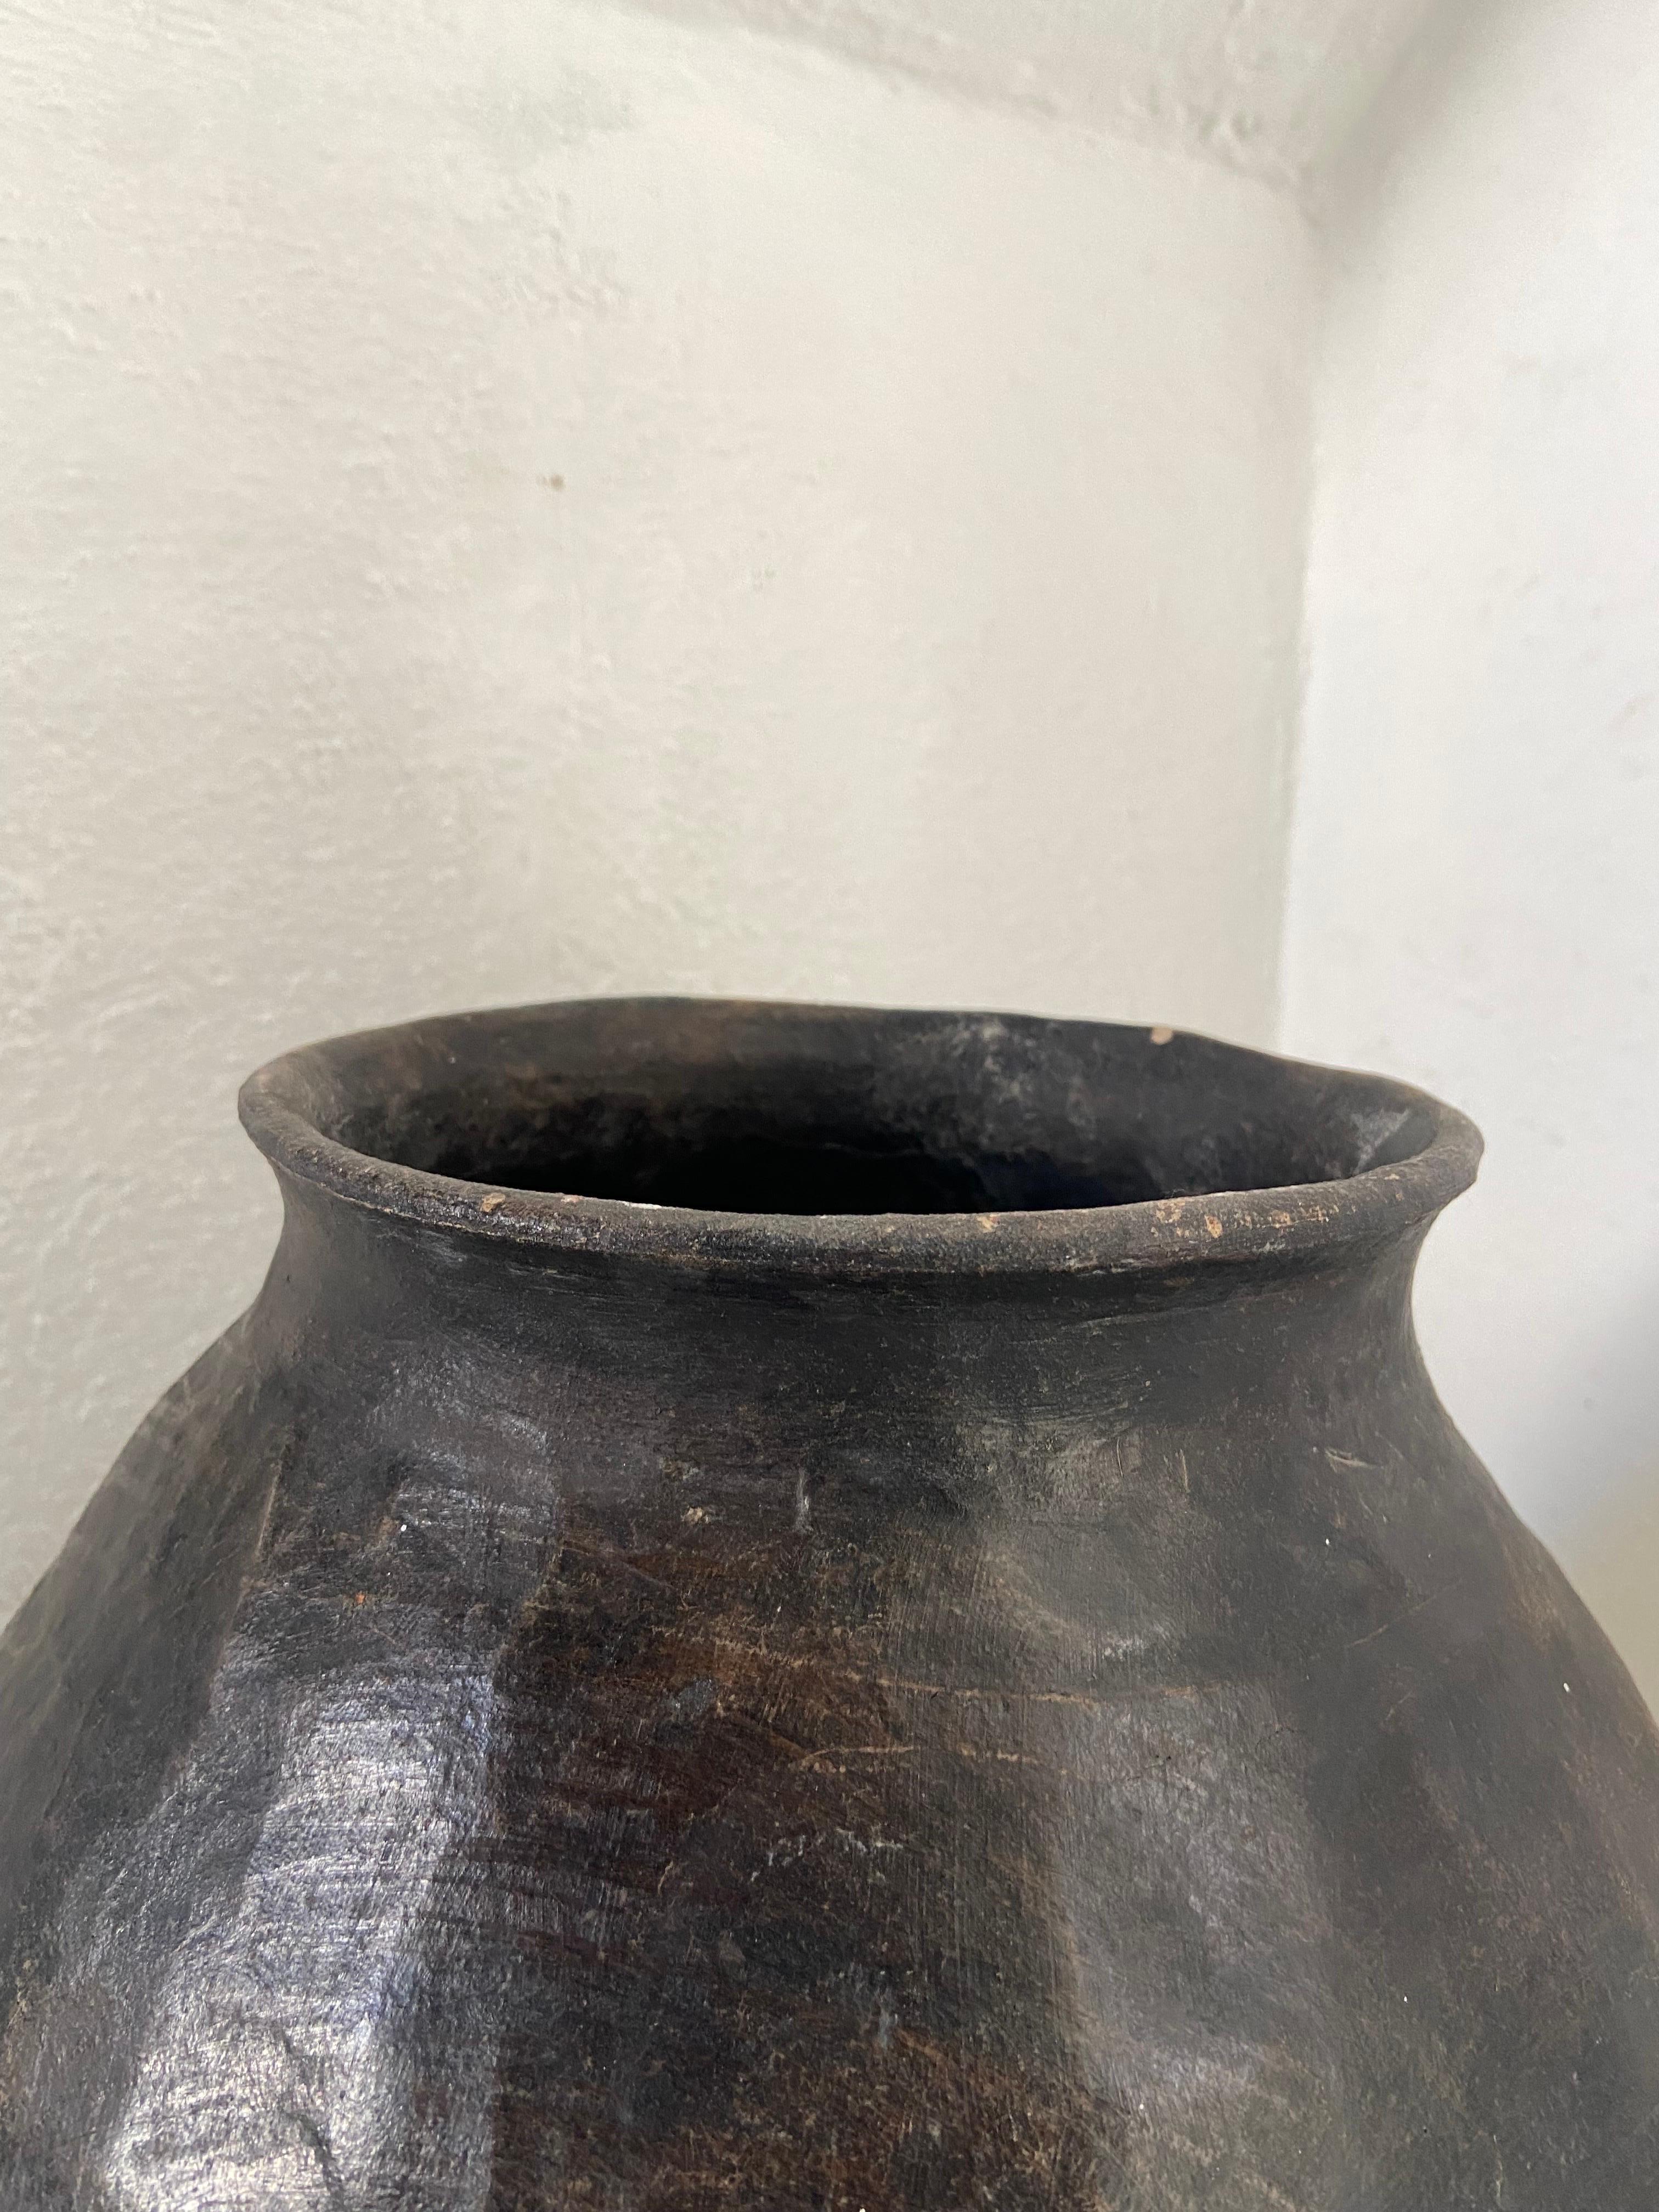 Mexican Tarahumara Ceramic Water Vessel from Mexico, circa Early 1900s